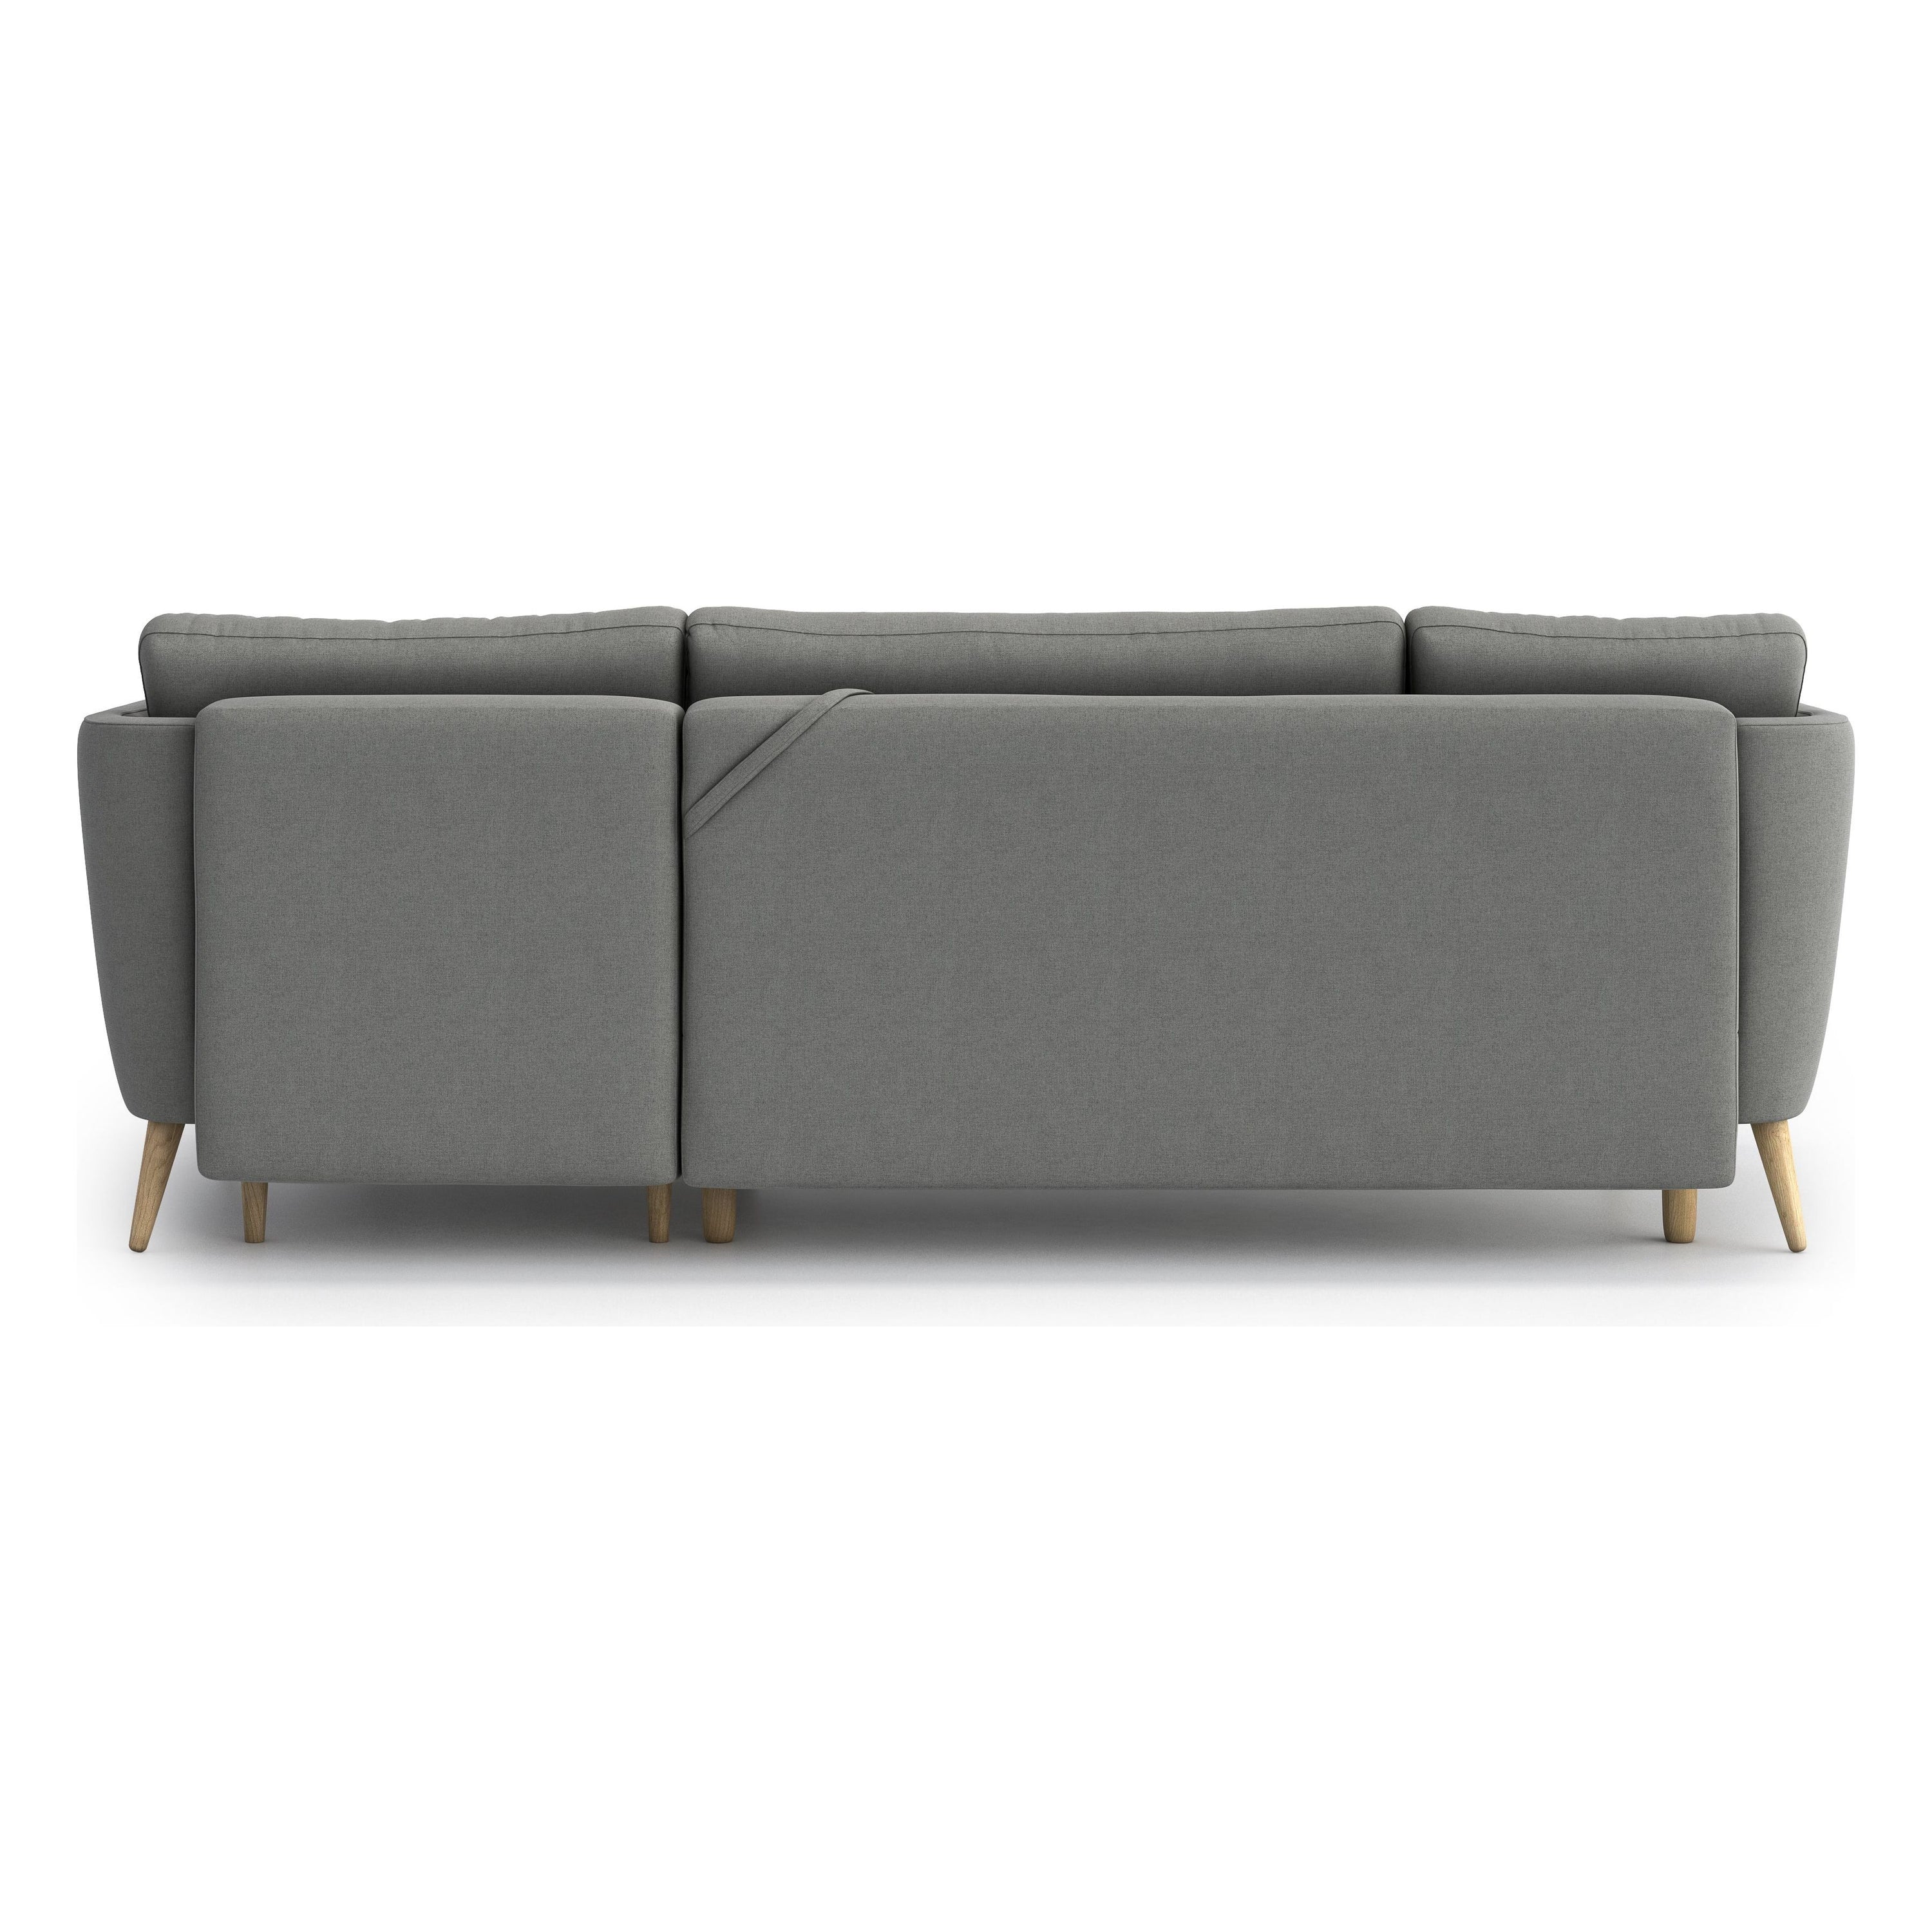 JANE kampinė sofa lova, pilka spalva, universali kampo pusė